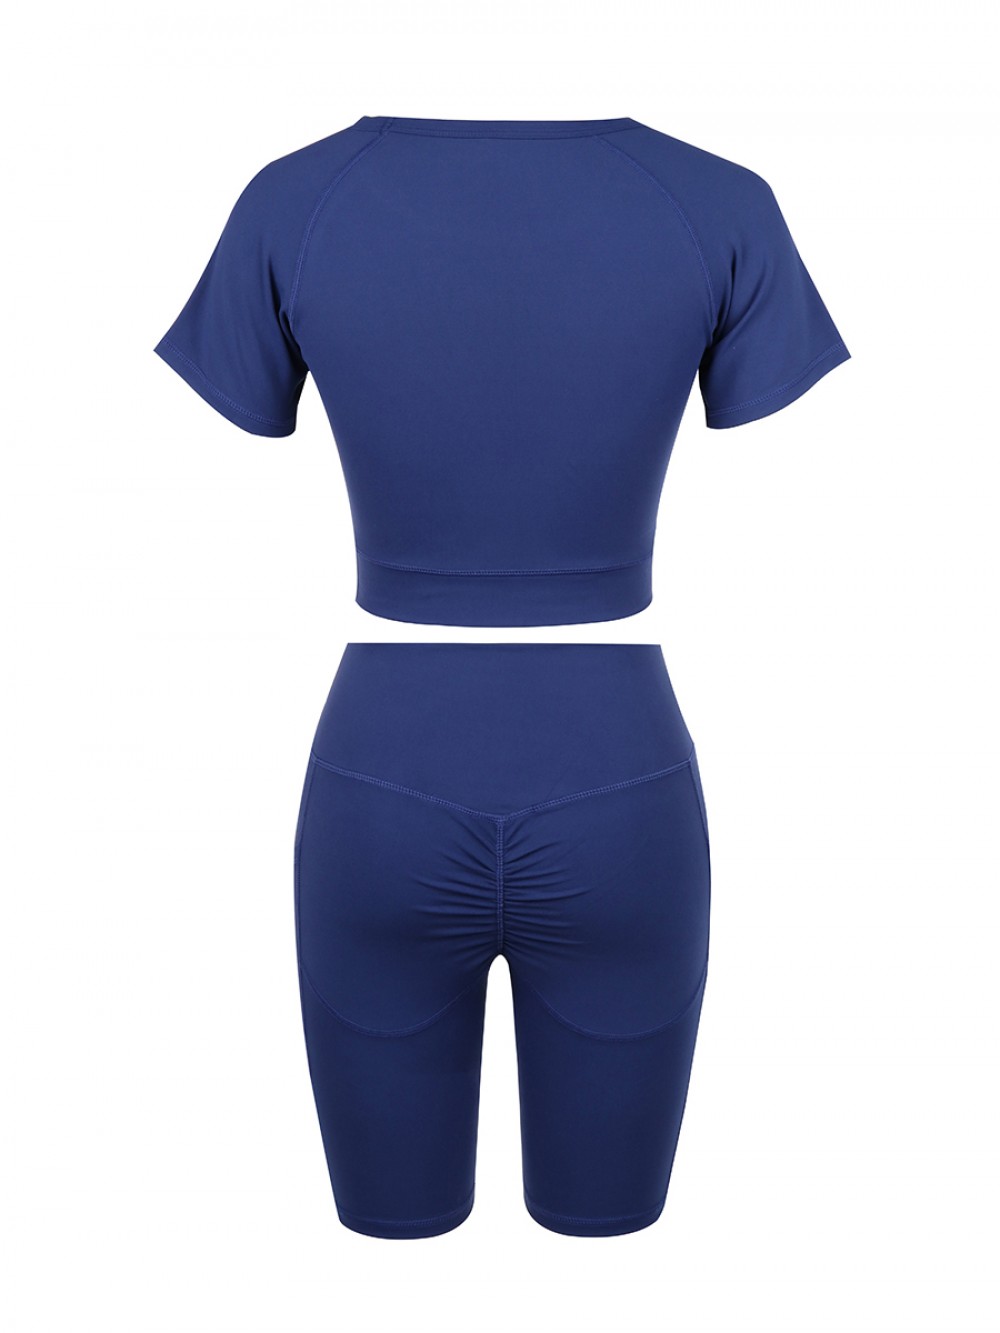 Smooth Dark Blue Ruched Athletic Set Solid Color Moving Online